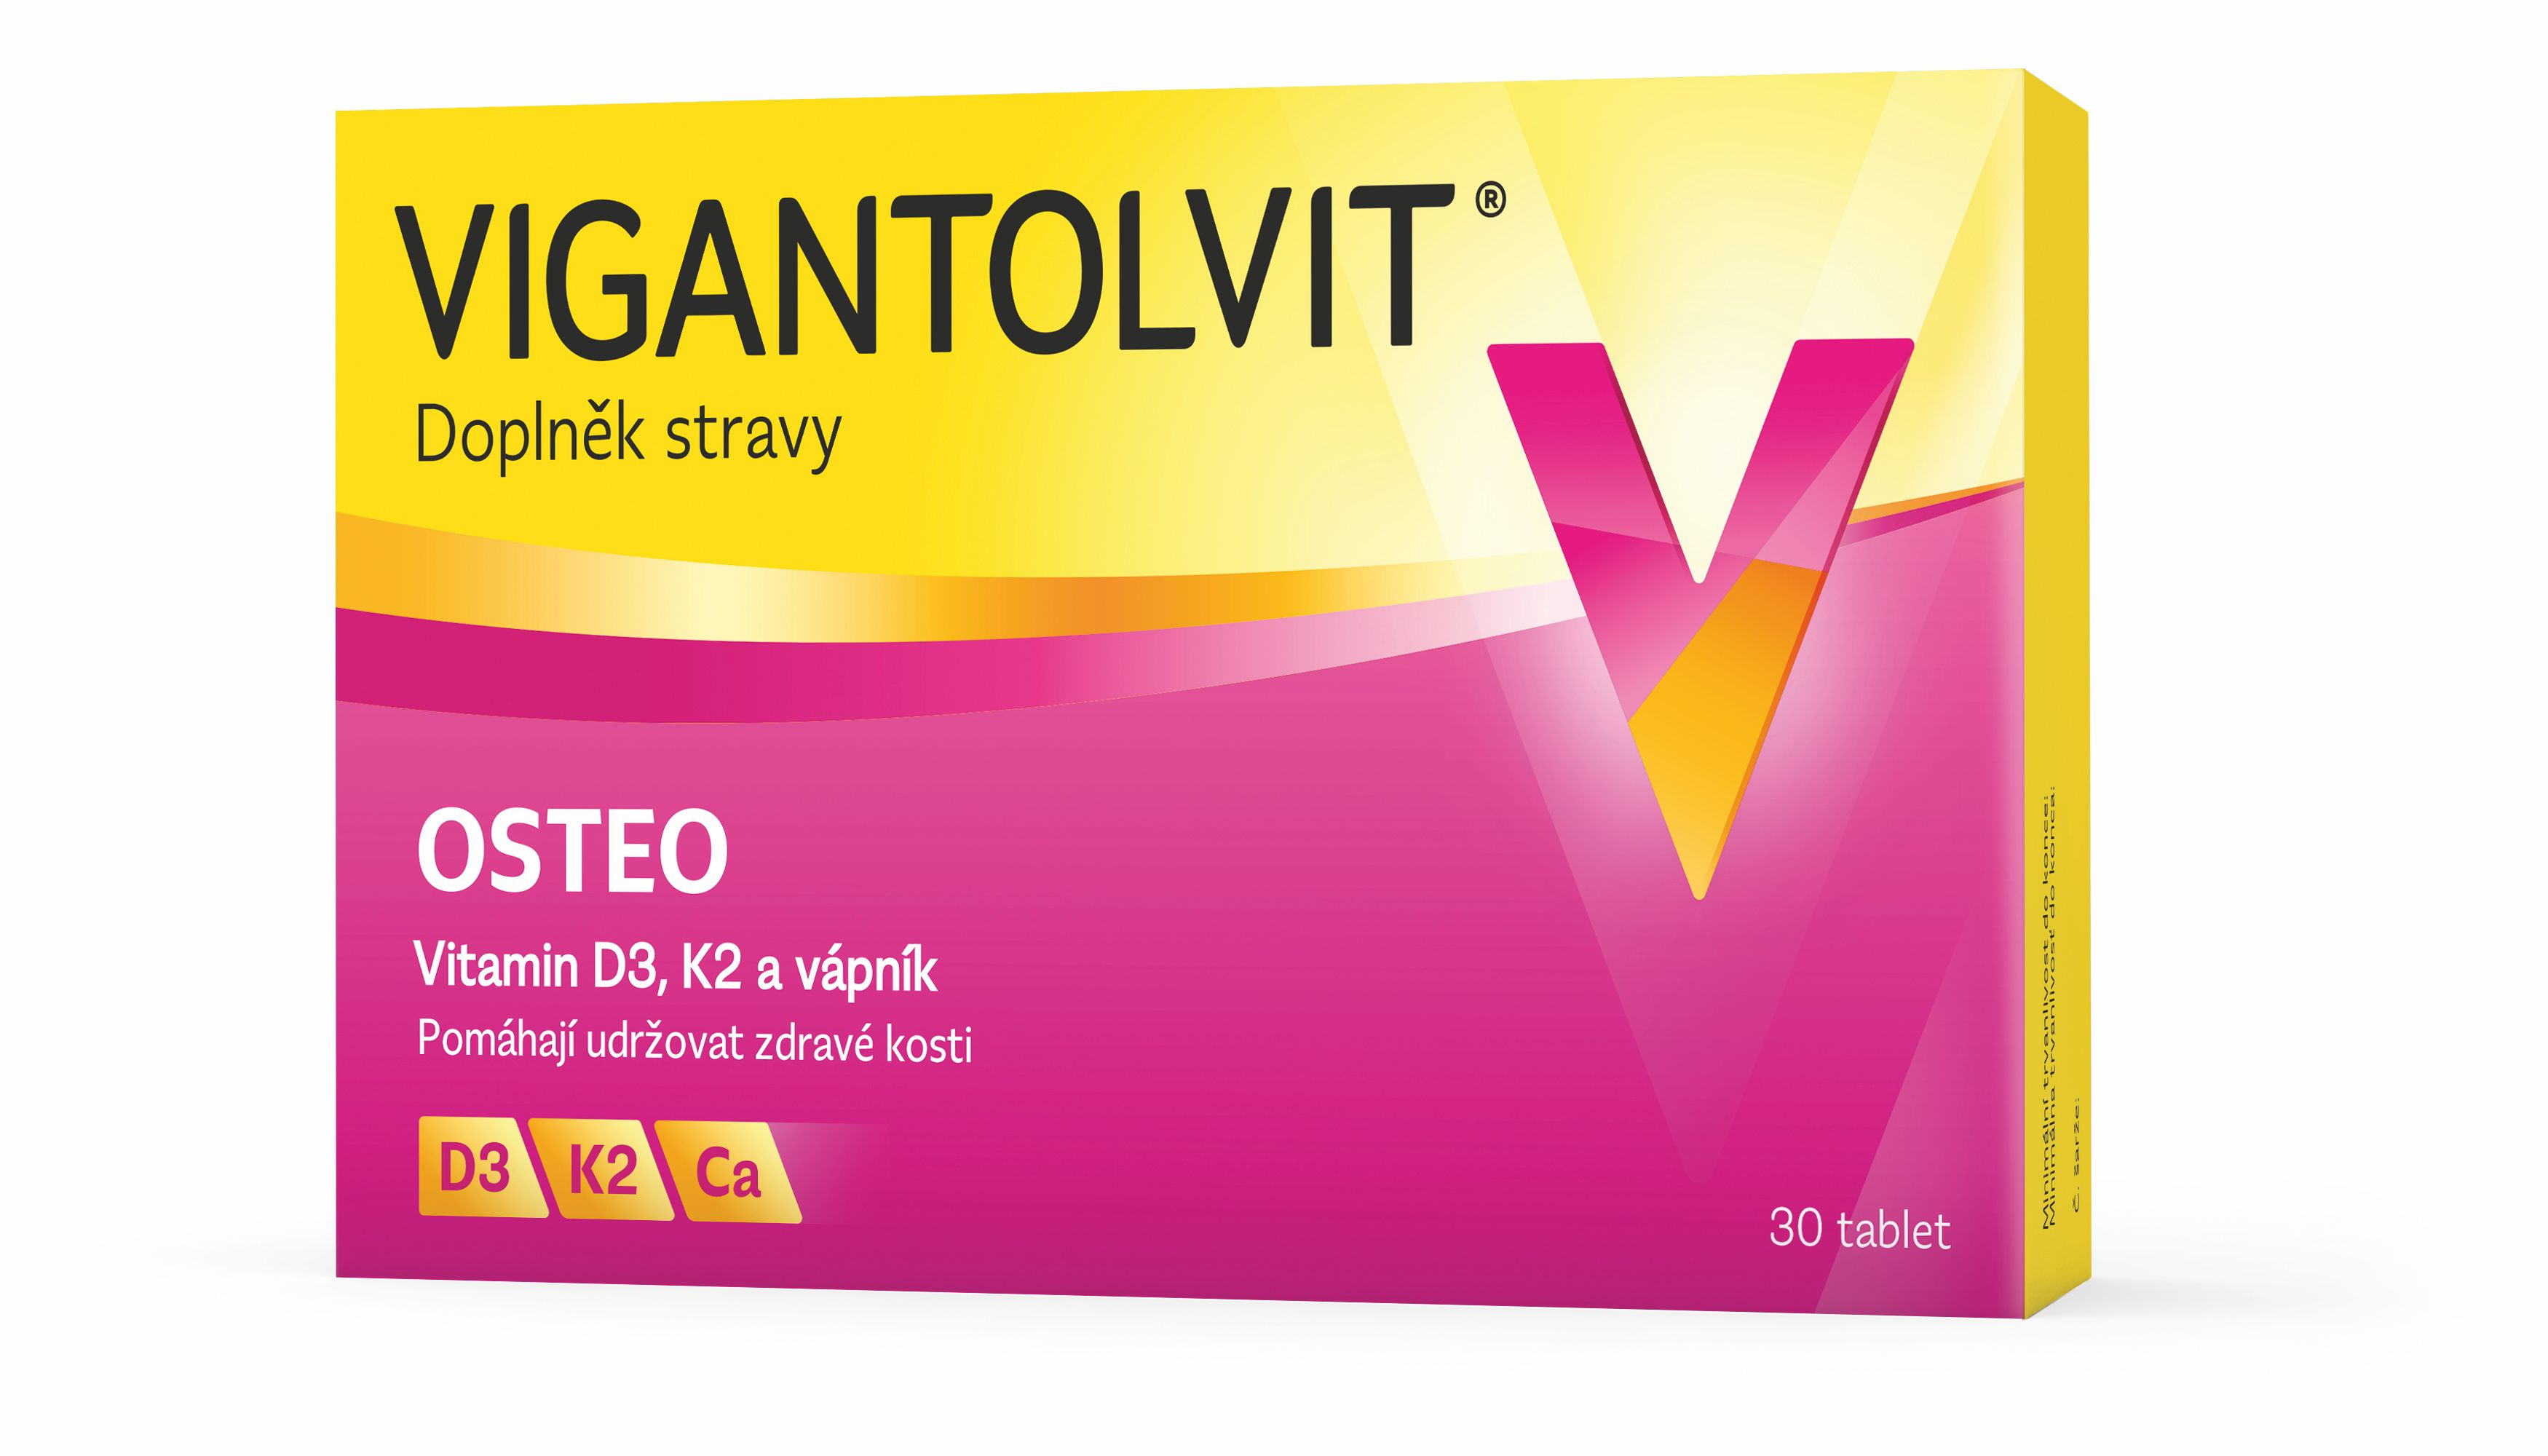 Vigantolvit Osteo 30 tablet Vigantolvit